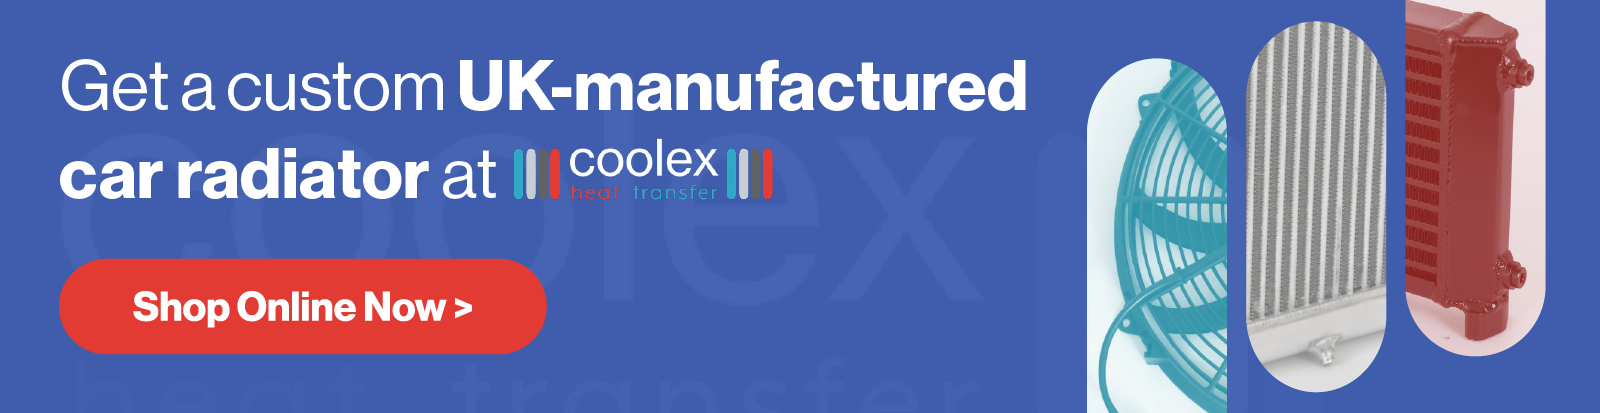 Coolex Shop Banner Desktop